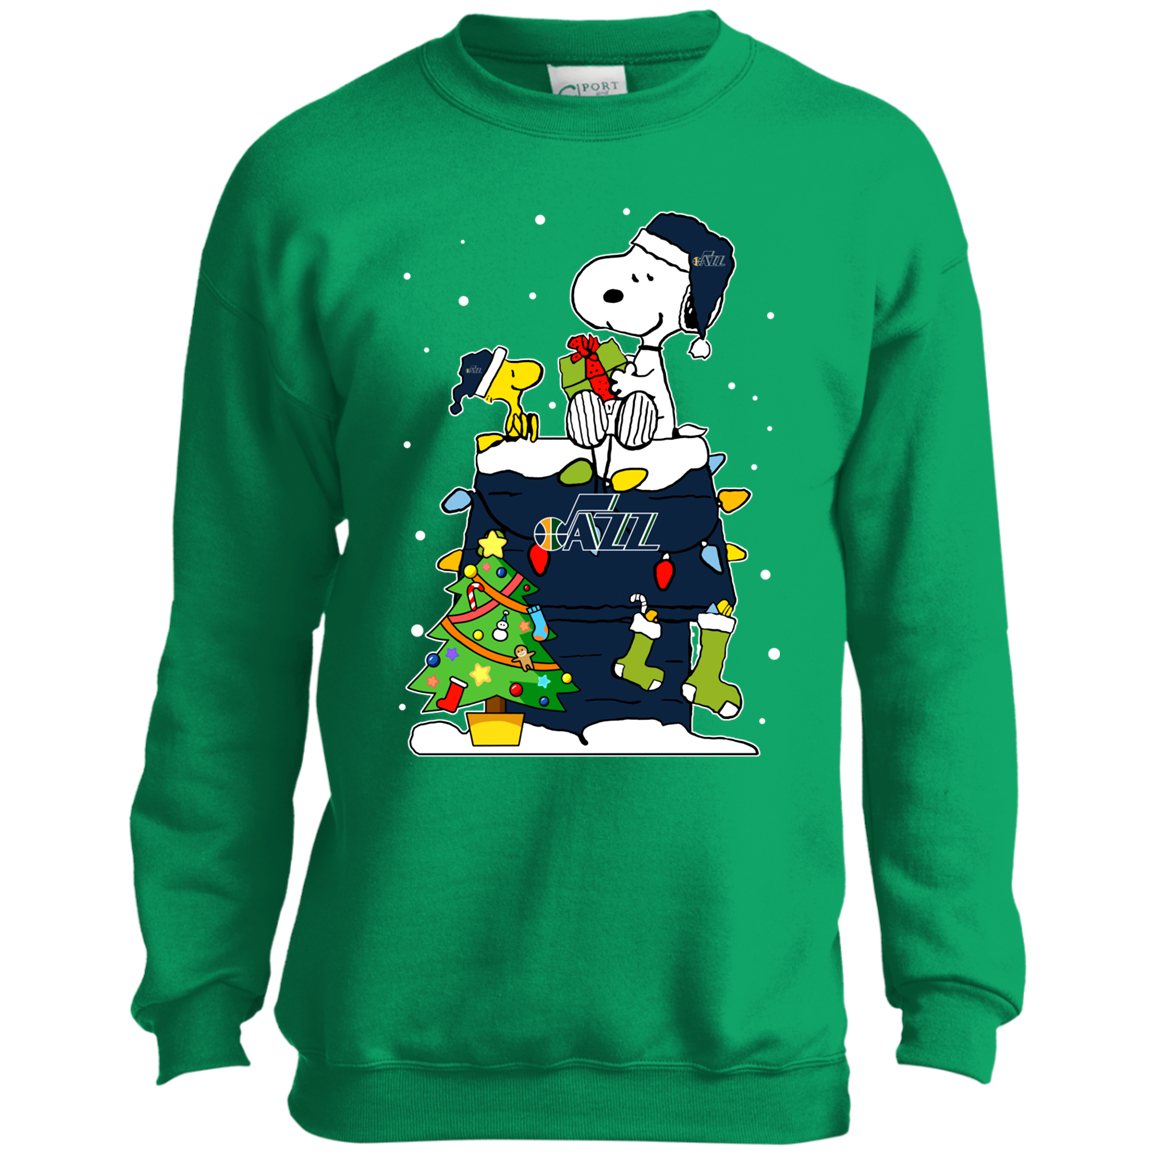 Utah Jazz Snoopy Ugly Christmas Sweaters Shirts